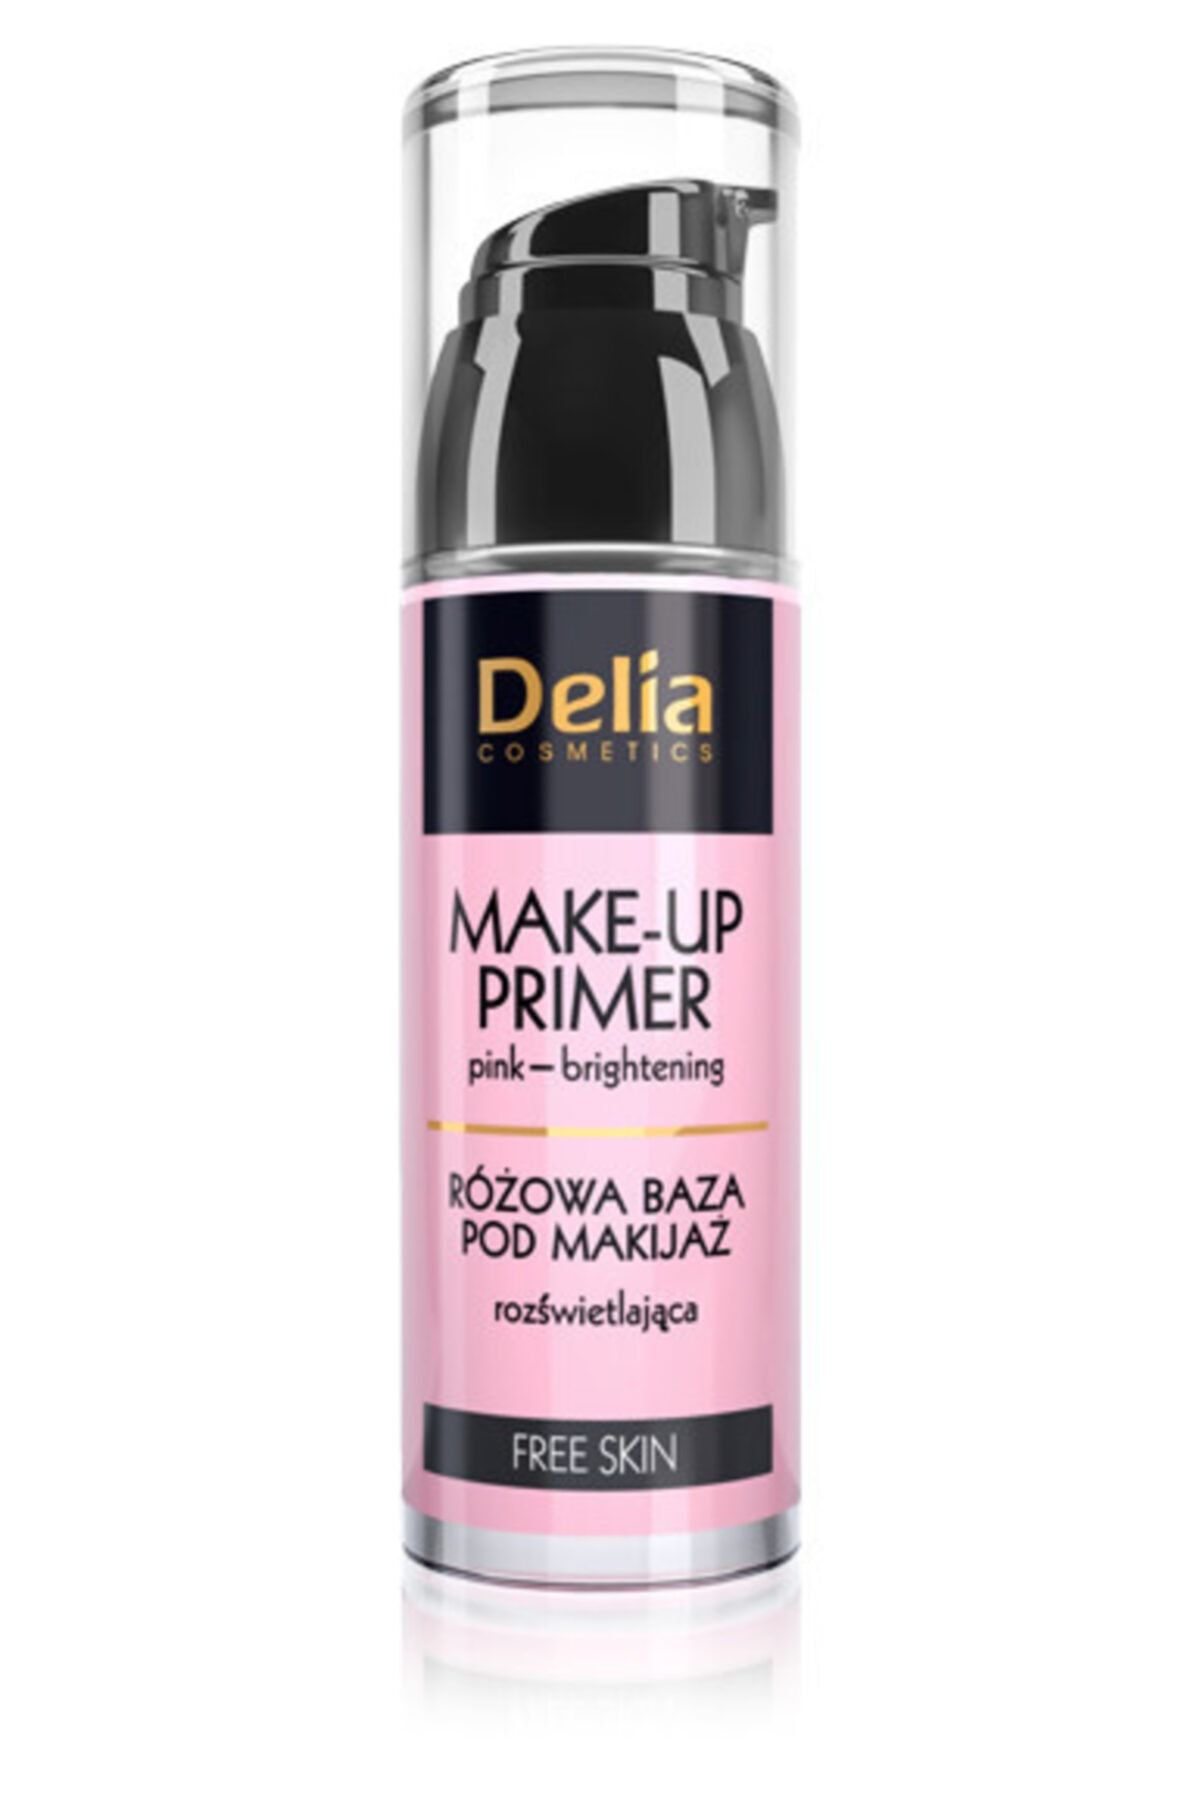 Праймер up. Delia косметика. Осветляющая база под макияж. Праймер для макияжа розовый. База под макияж Макс фактор.